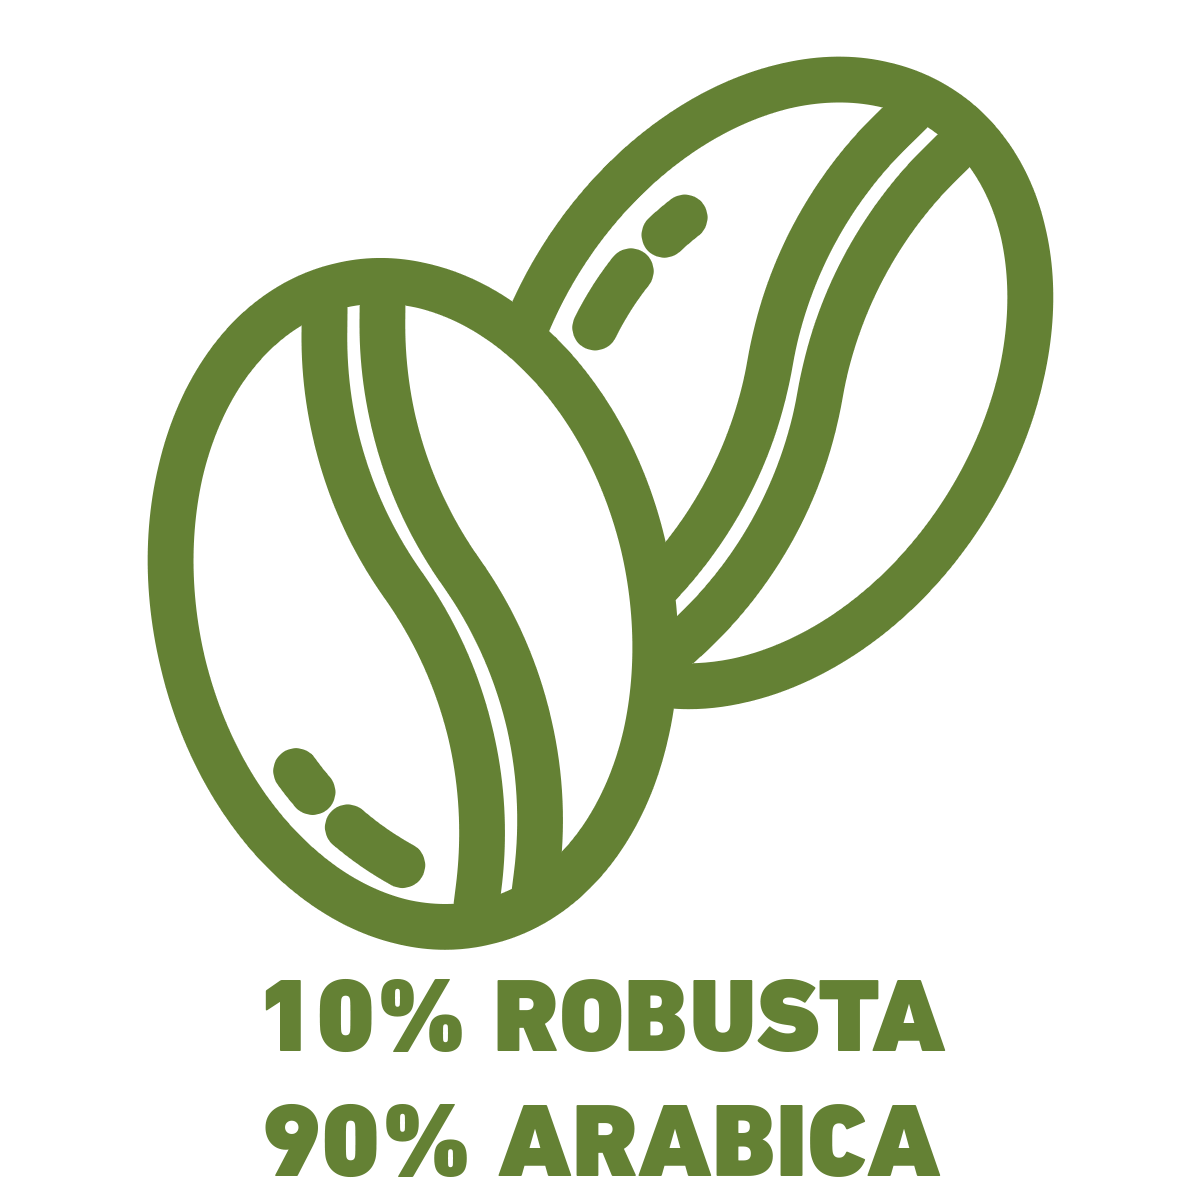 10% Robusta 90% Arabica